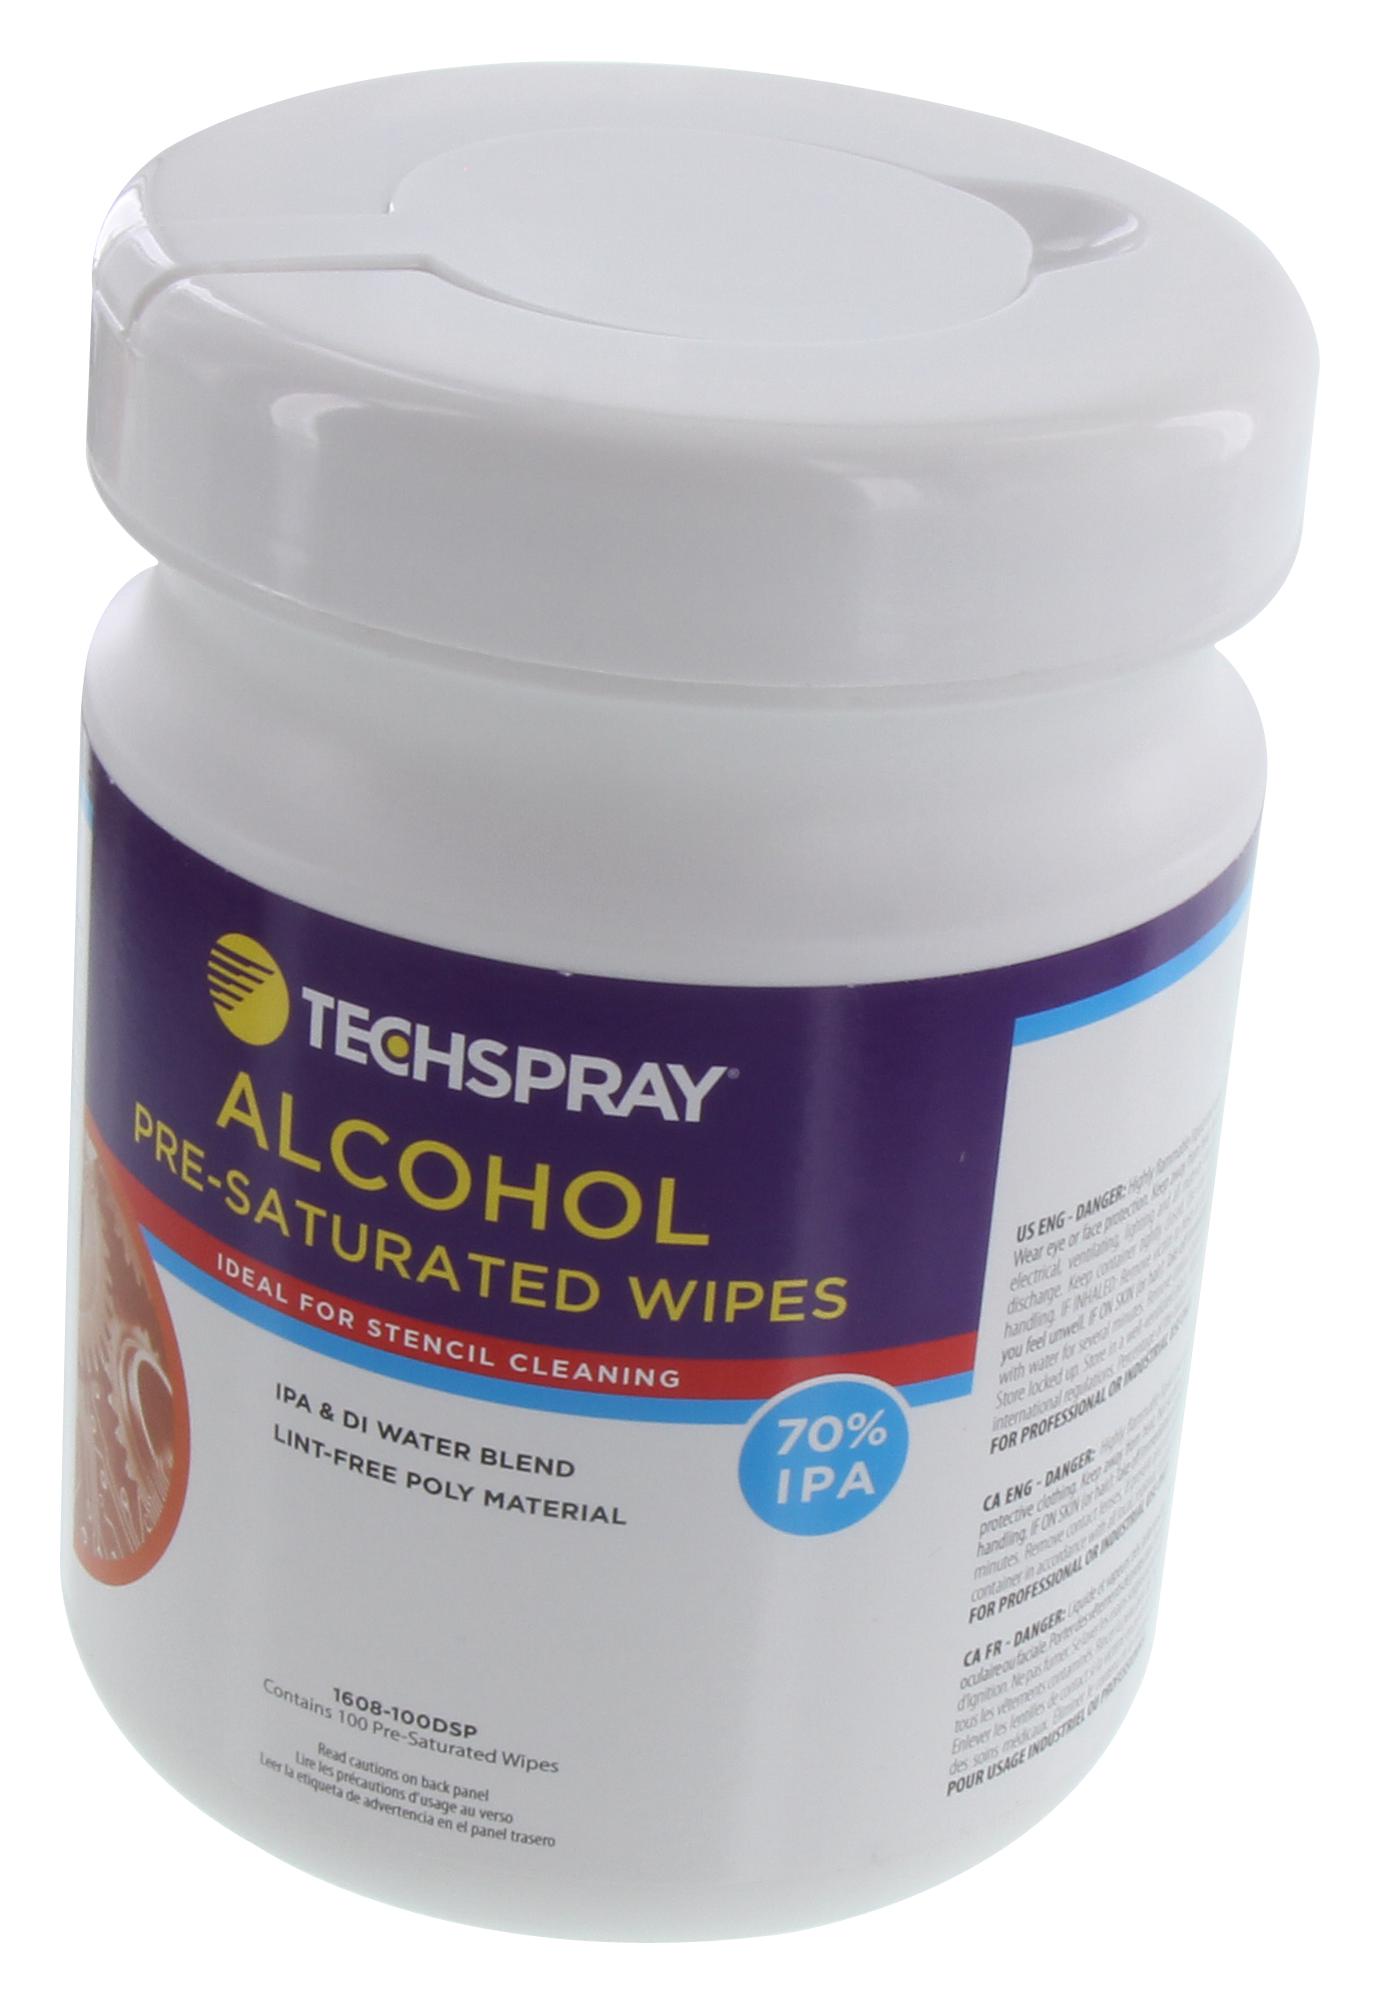 Techspray 1608-100Dsp Wipe Material: -